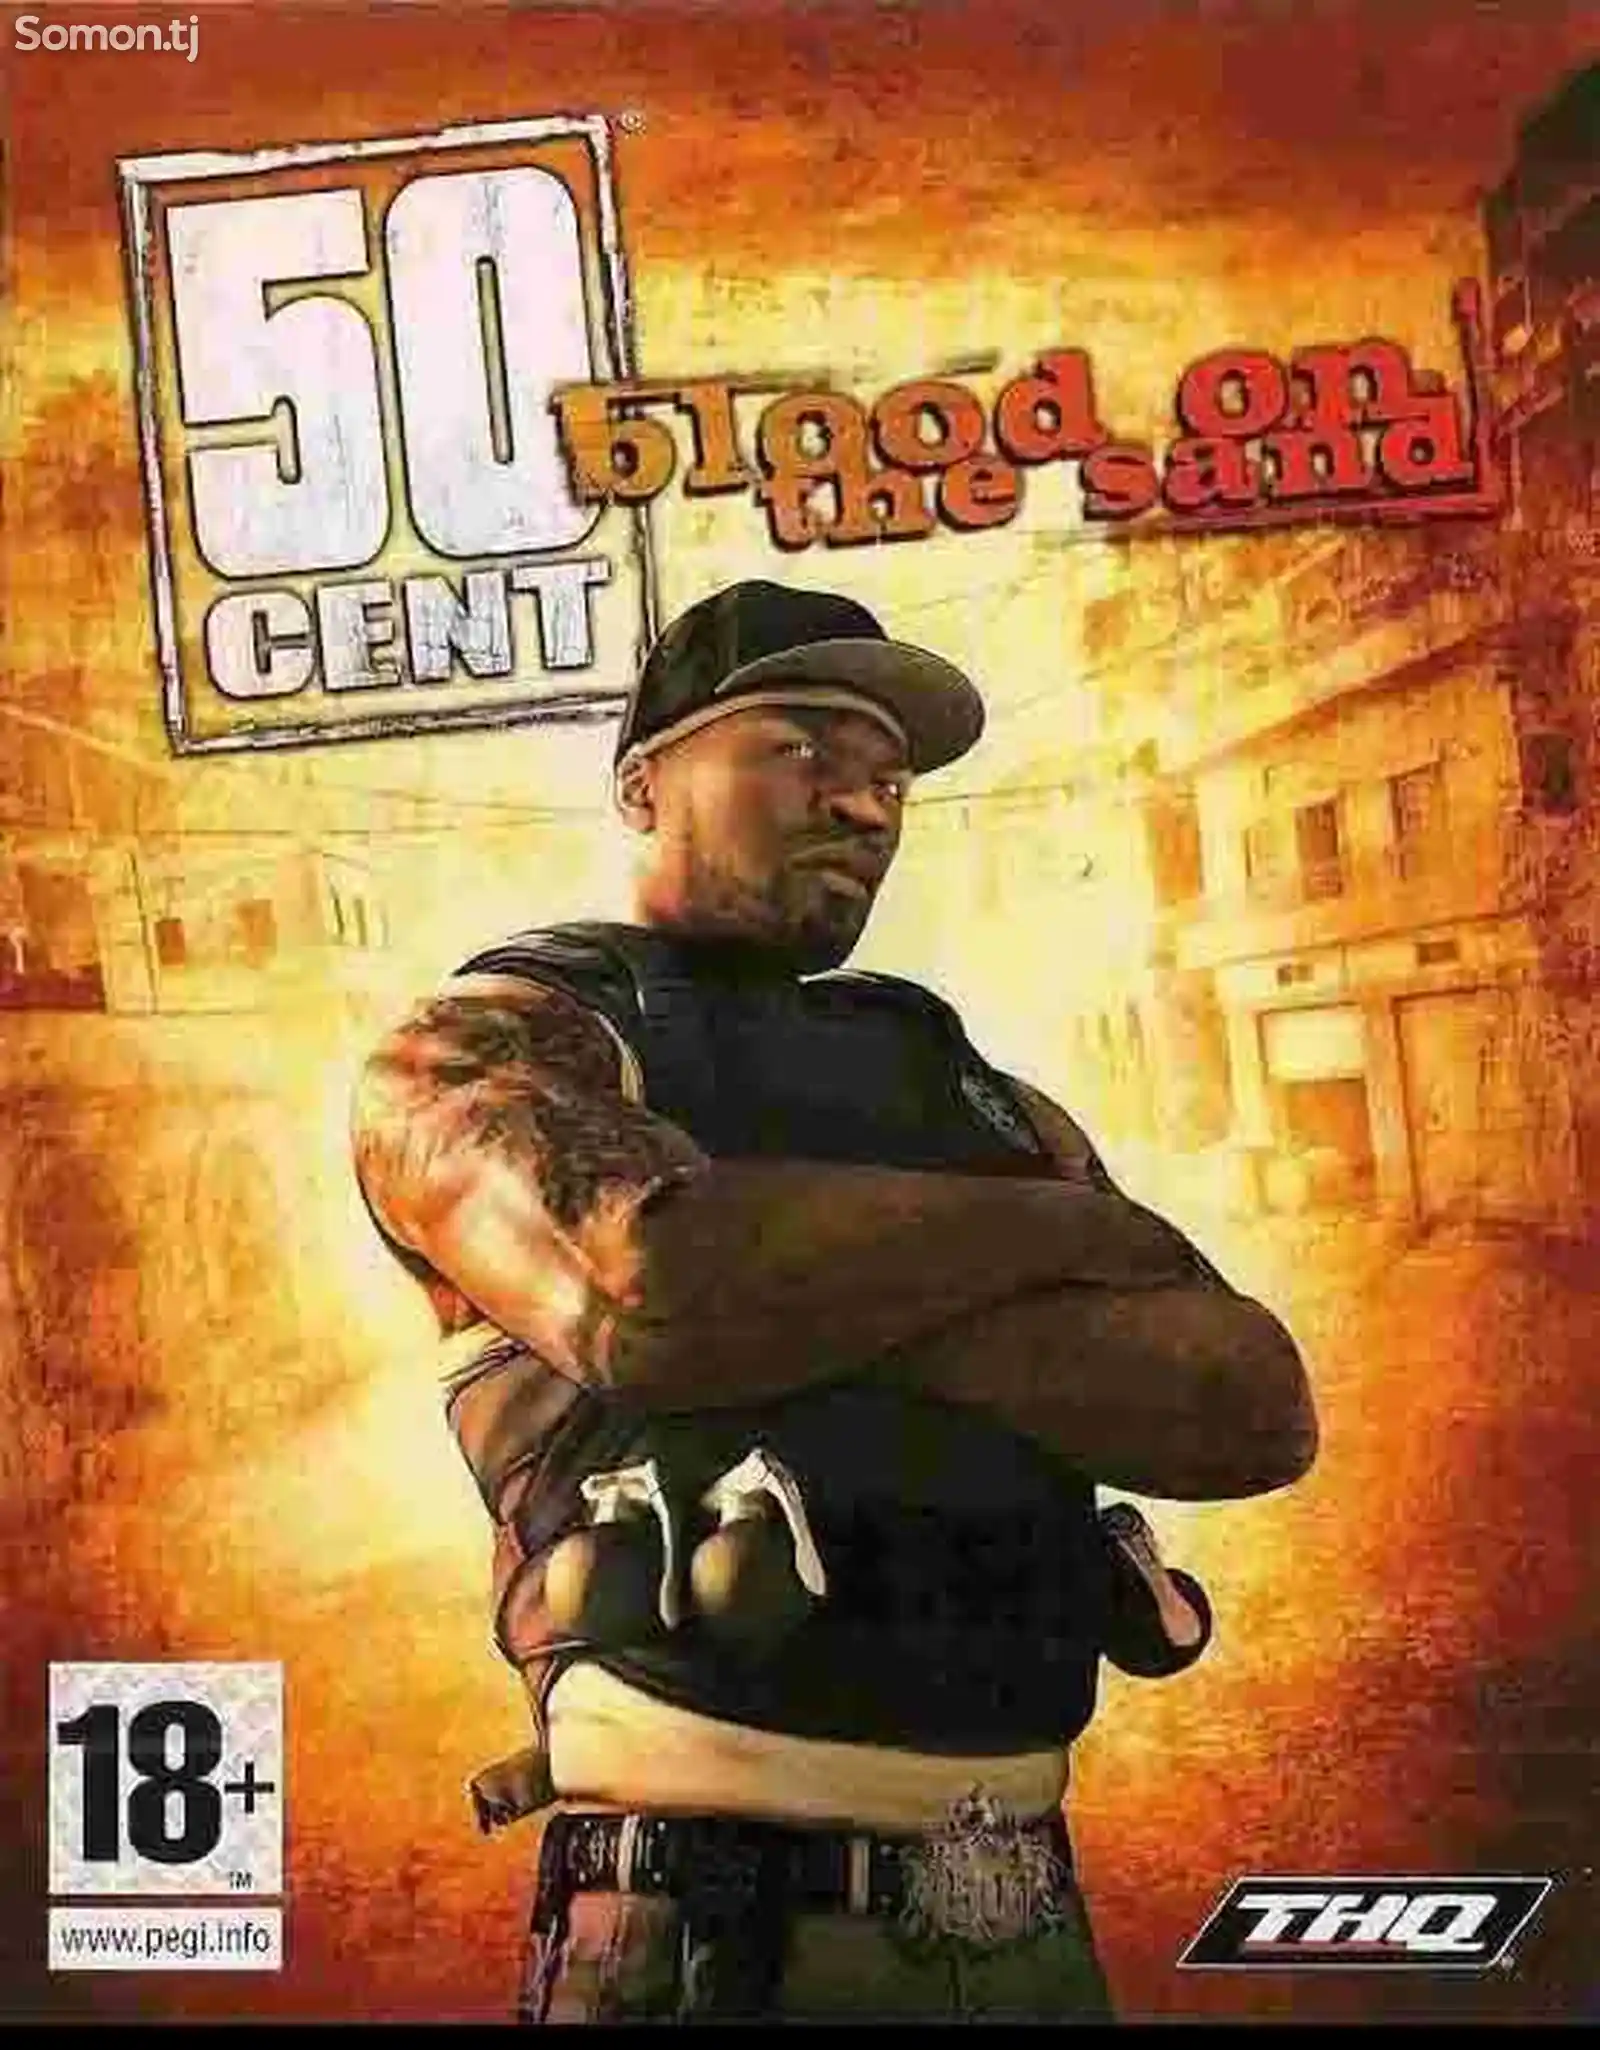 Игра Cent Blood On The Sand для PlayStation 3